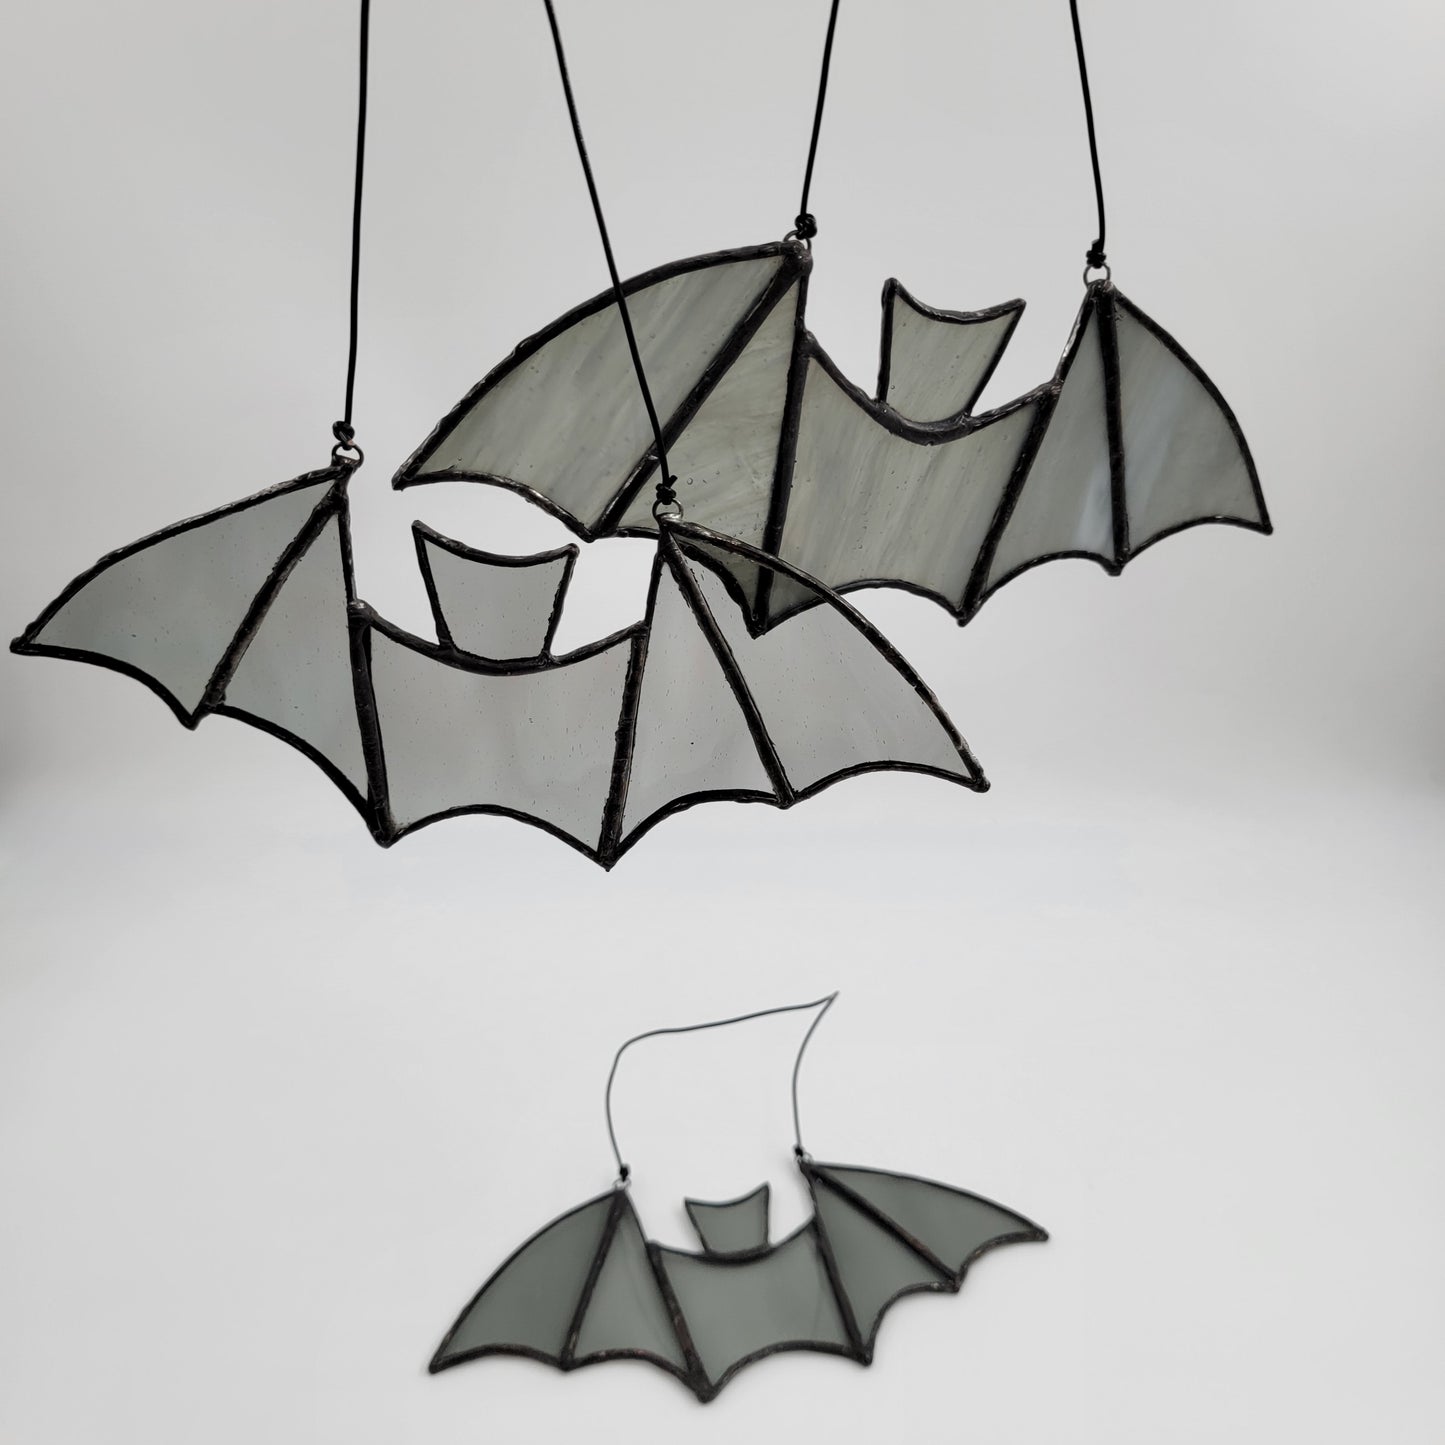 Bat Stained Glass Window Art - Halloween Decorations